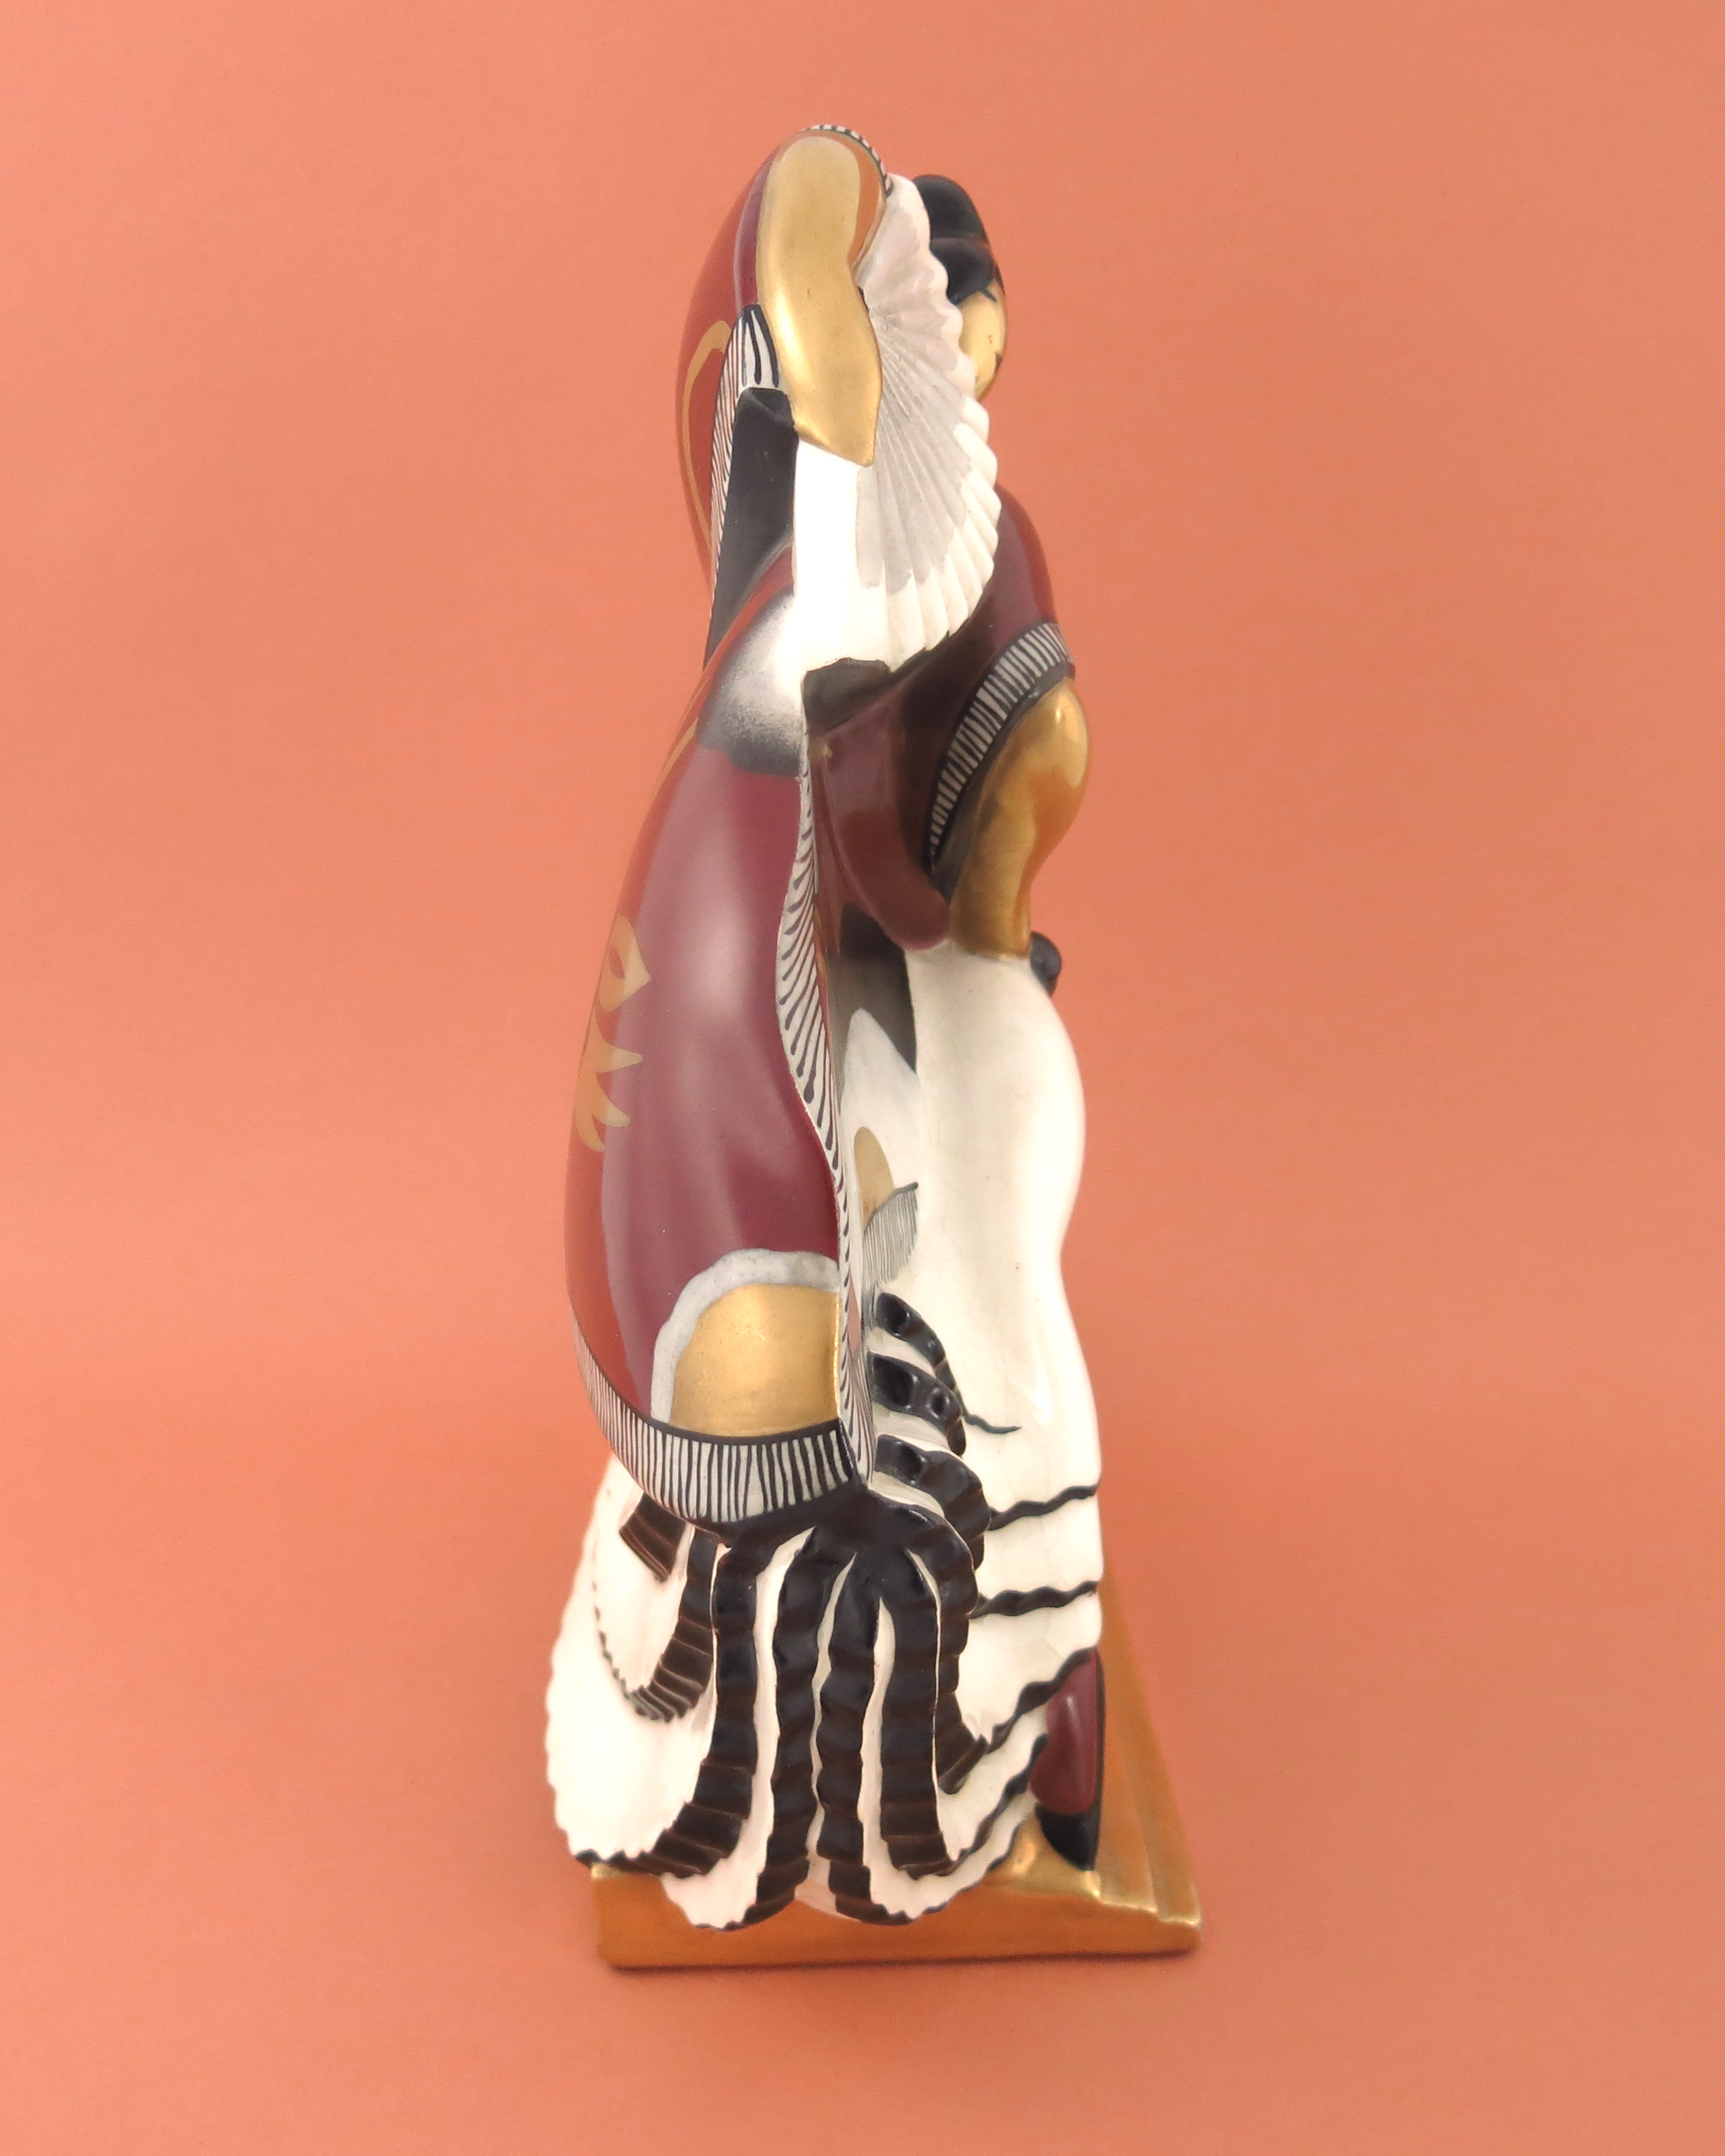 Robj (attributed) for Primavera, an Art Deco figure, Spanish Dancer - Image 3 of 5